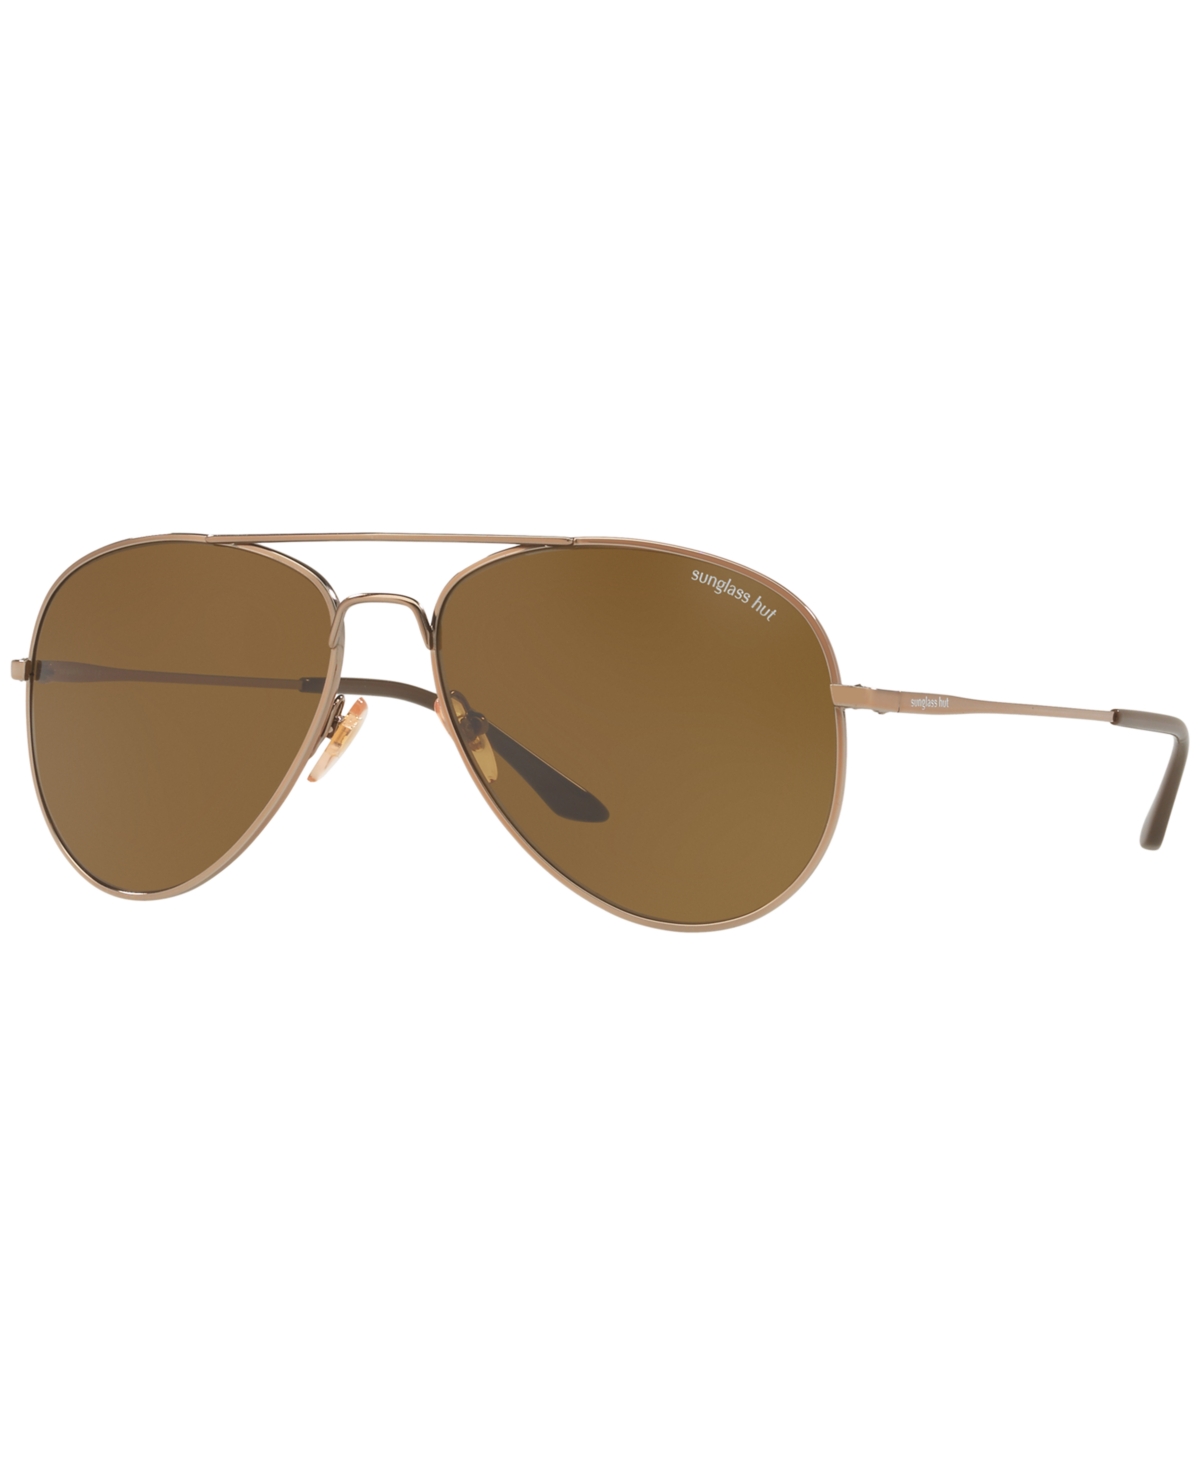 Sunglasses, HU1001 59 - BROWN/BROWN